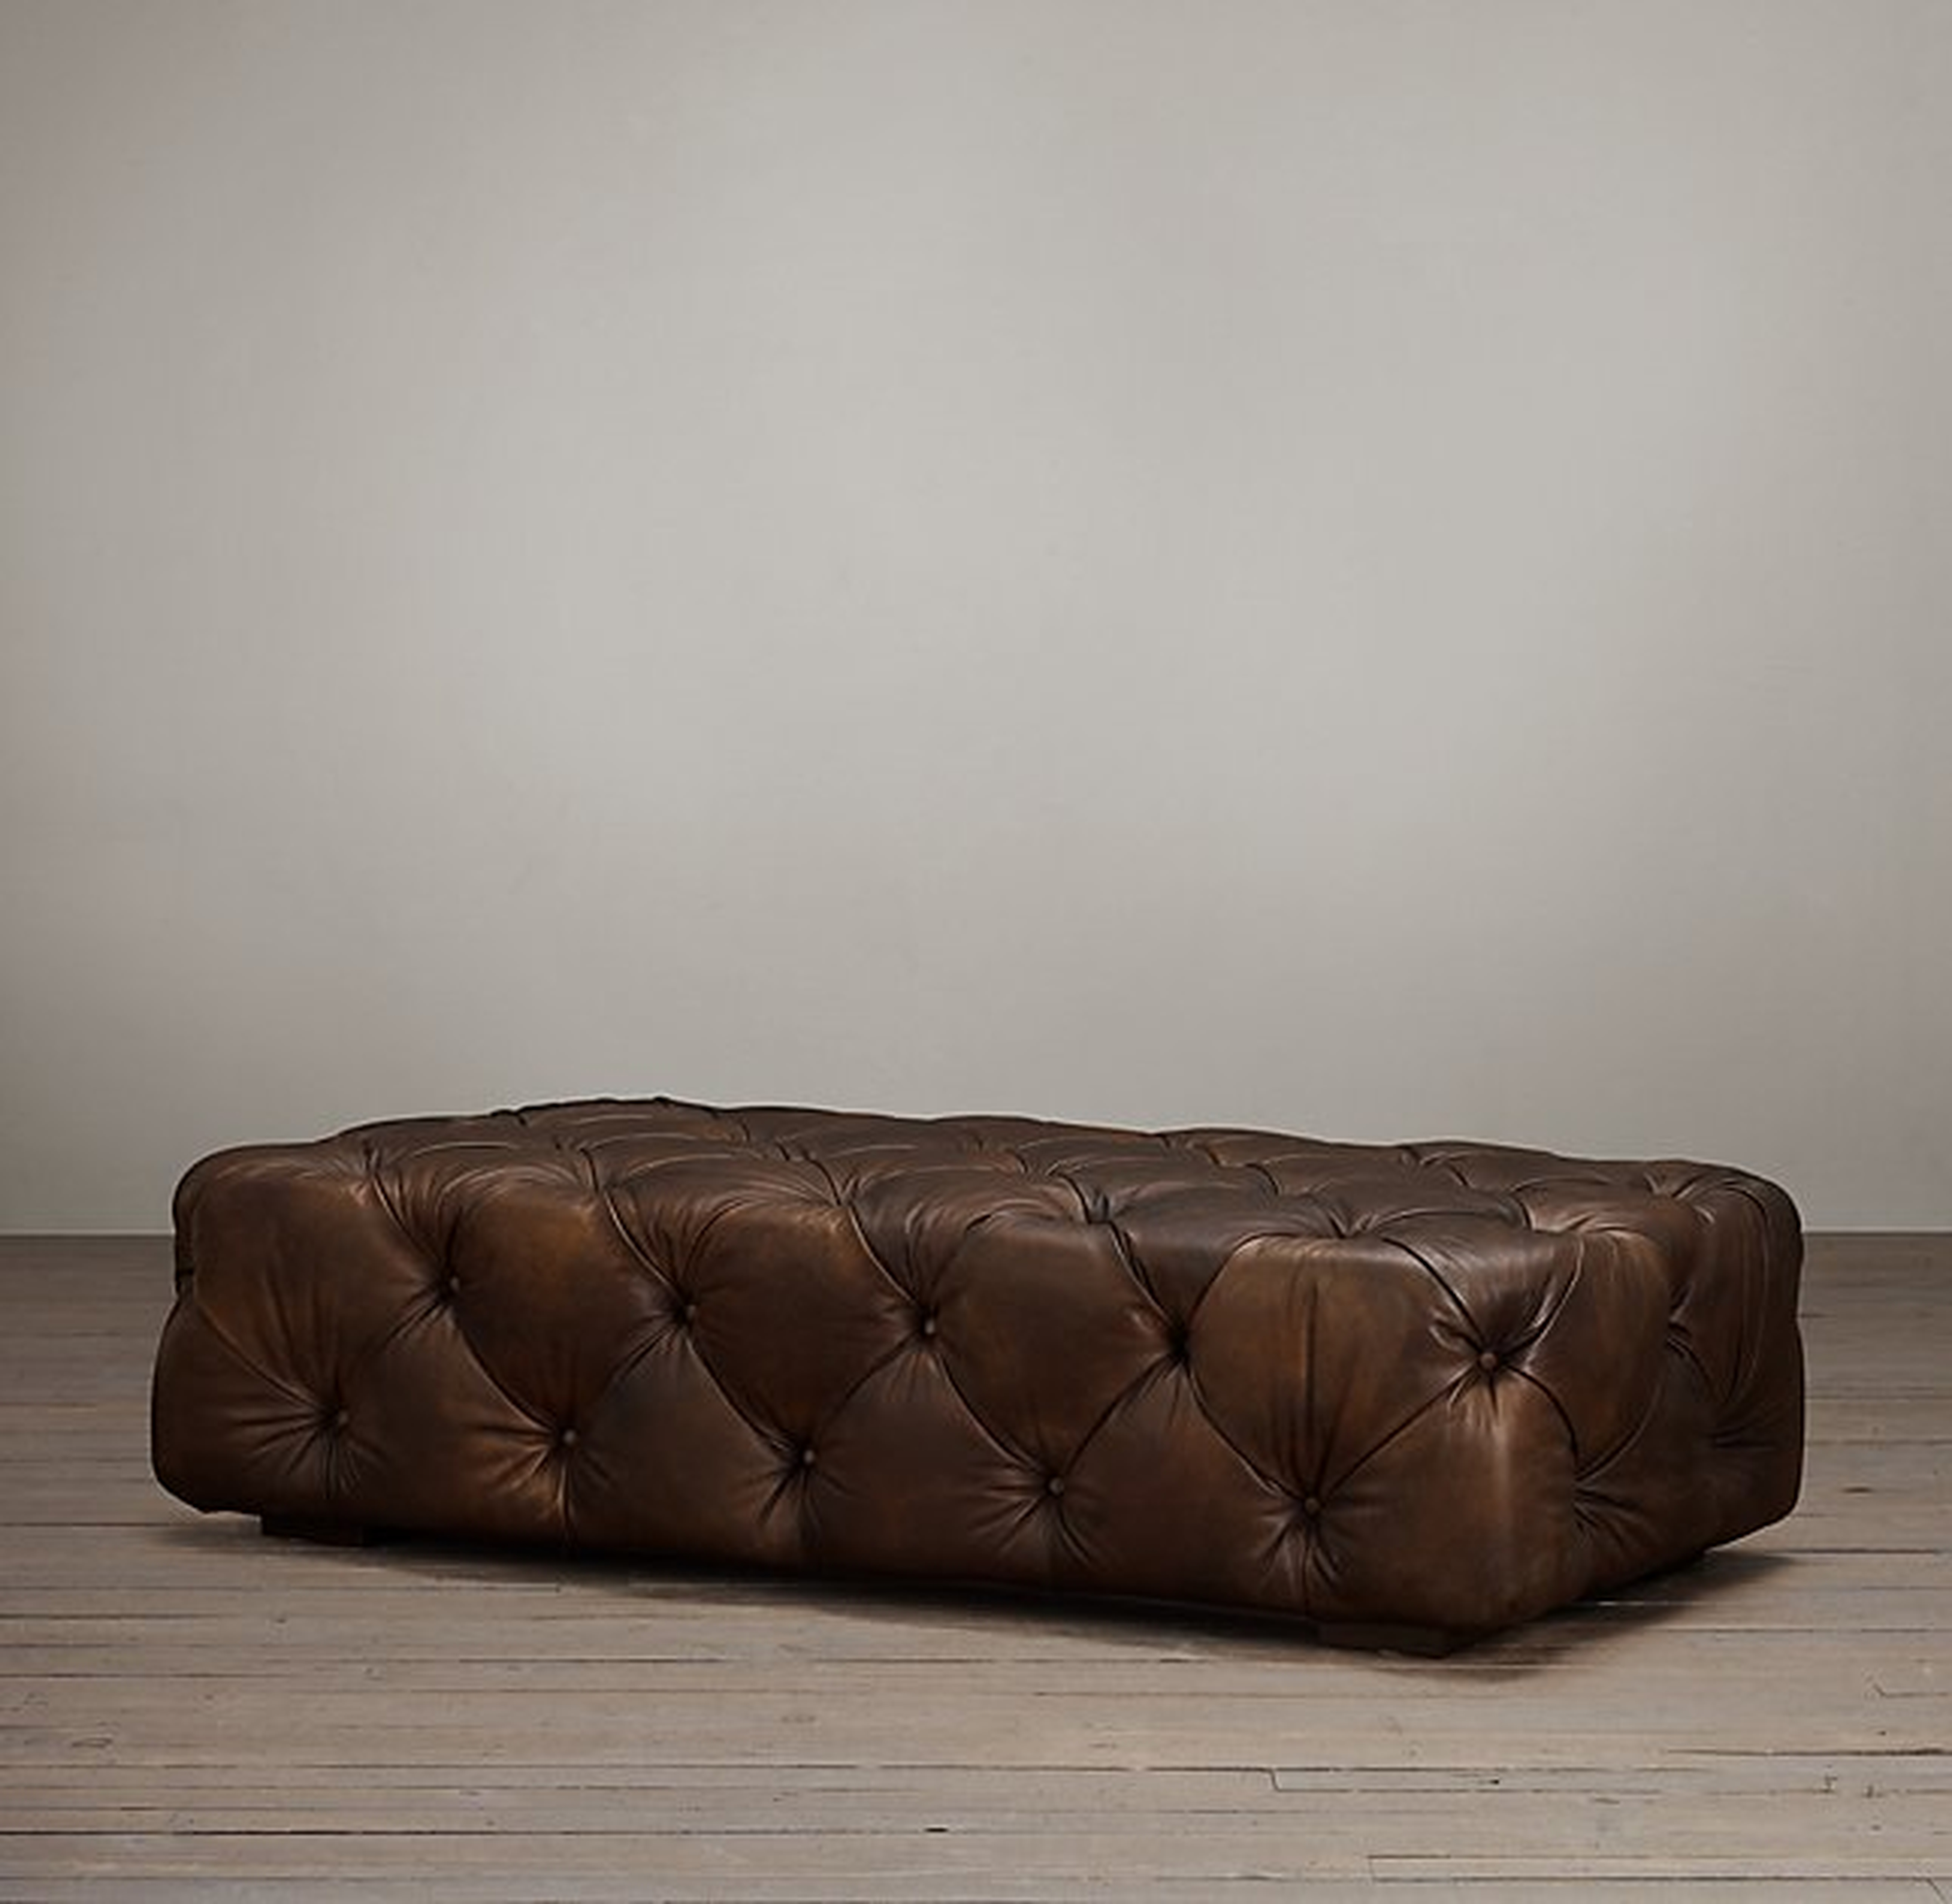 Soho Tufted Leather Ottoman - Leather Antiqued Chestnut - RH